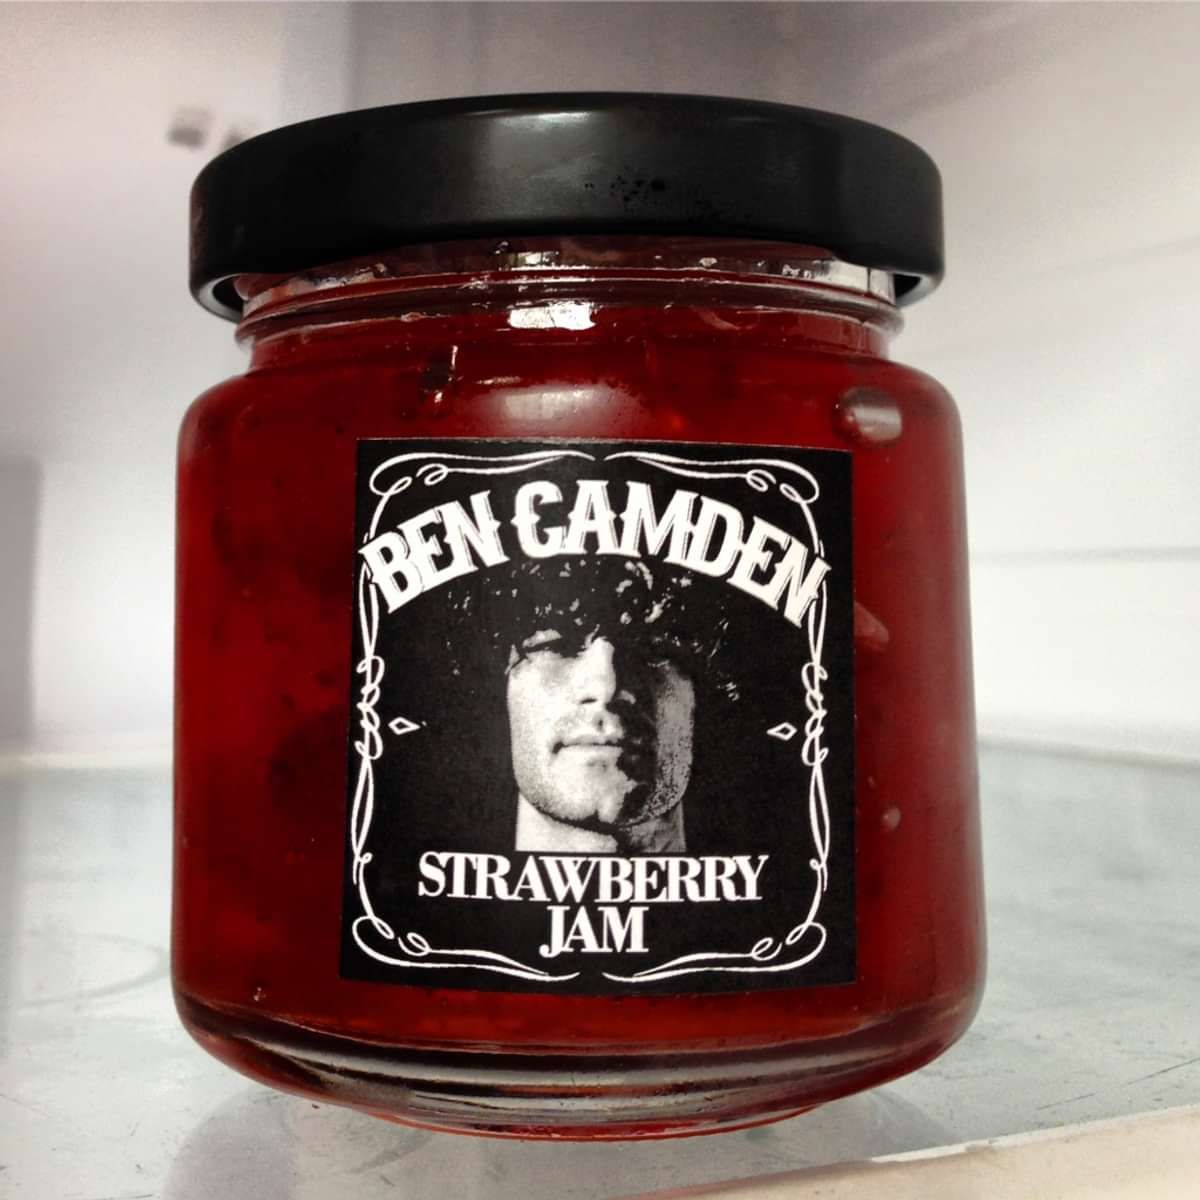 Strawberry Jam - Single (cd and jam) - Ben Camden